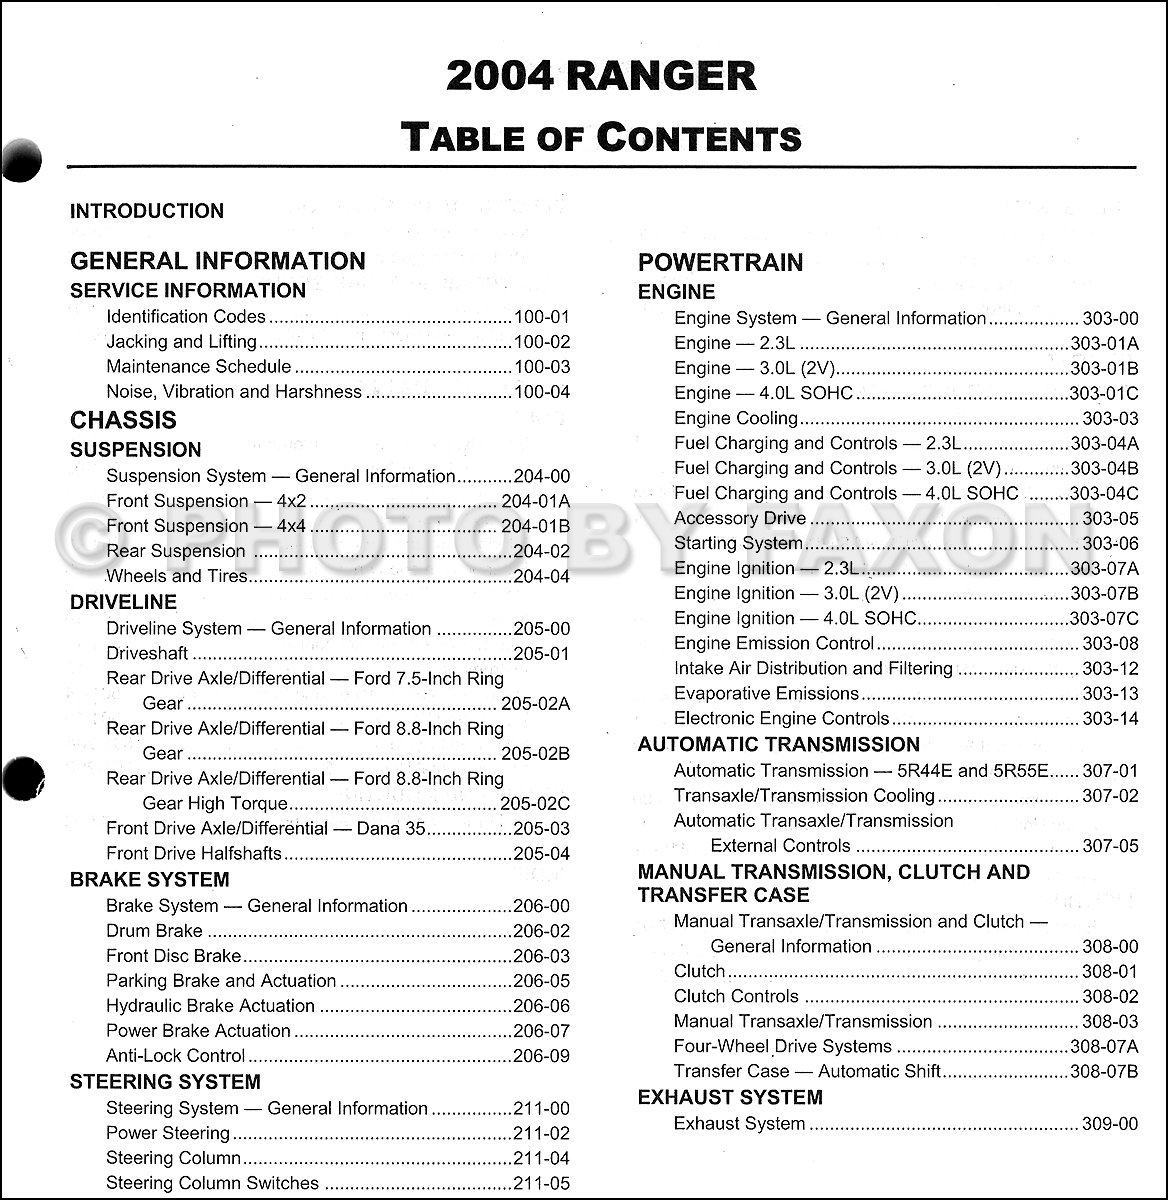 2004 Ford ranger edge service manual #2